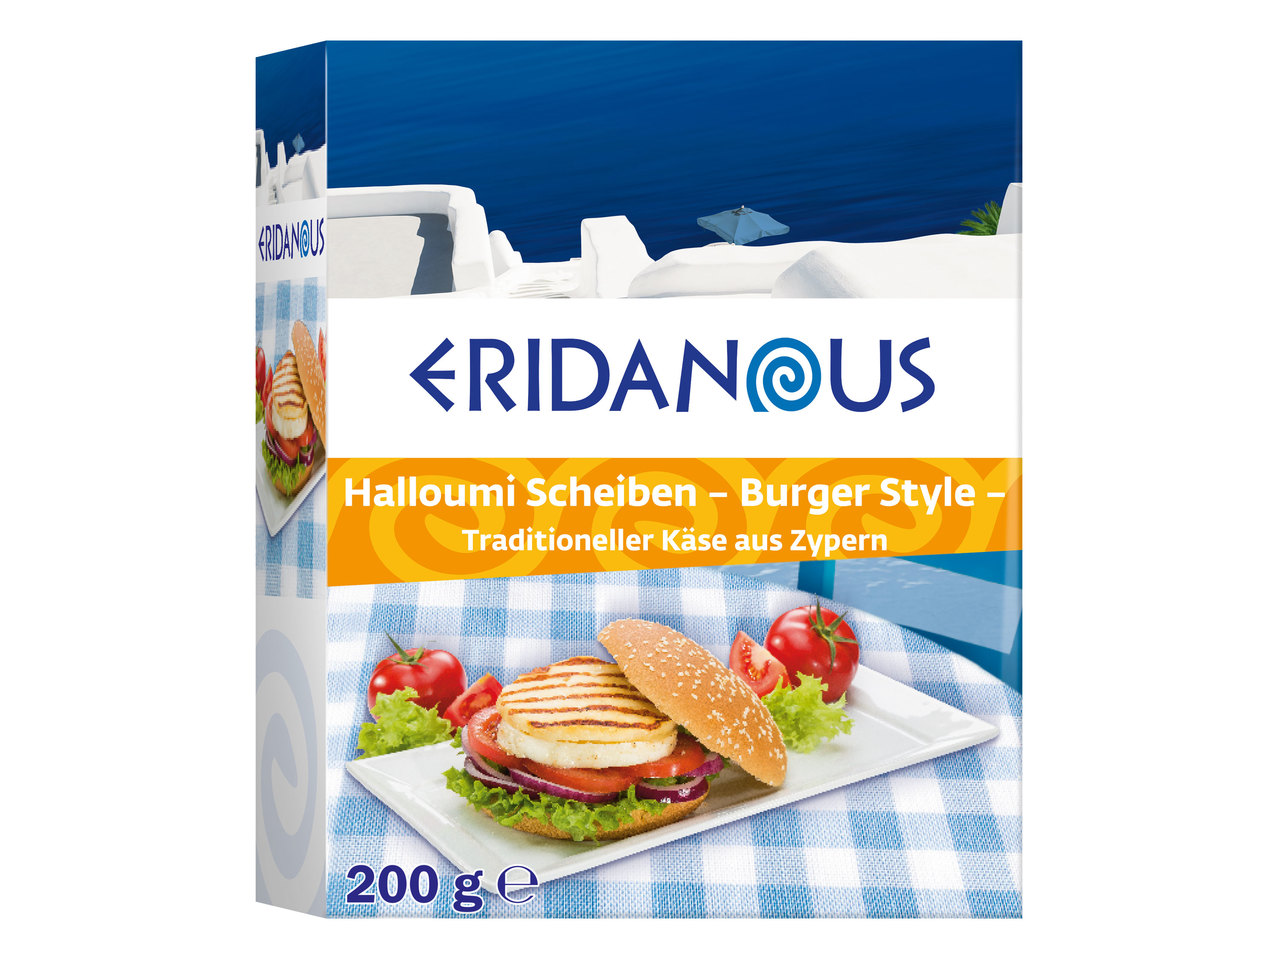 ERIDANOUS Halloumi Scheiben – Burger Style